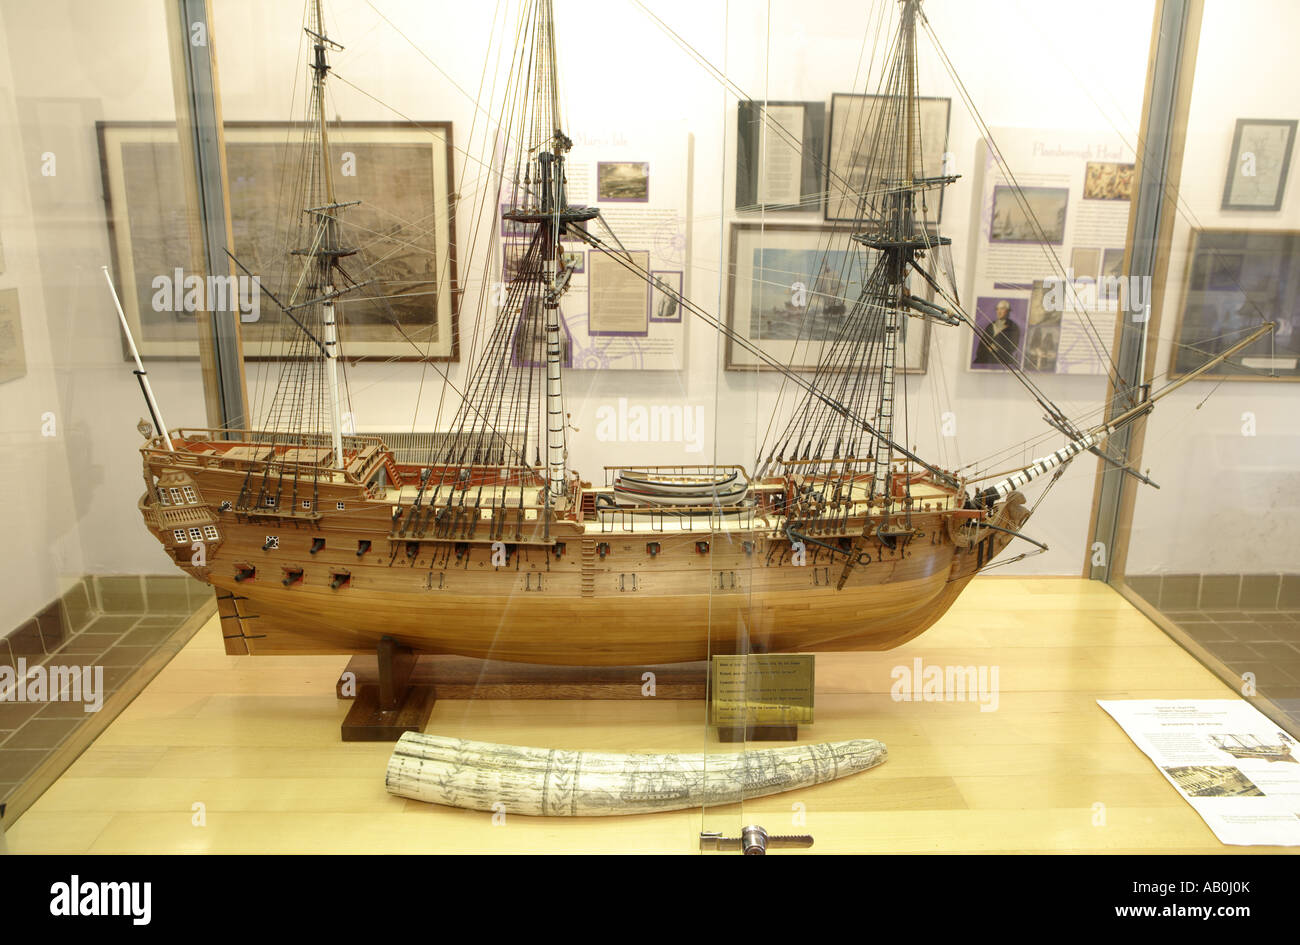 Der Vater des amerikanischen John Paul Jones Museum Arbigland Dumfries Schottland UK Modells der Bonhomme Richard Schiffe eines Jones Stockfoto